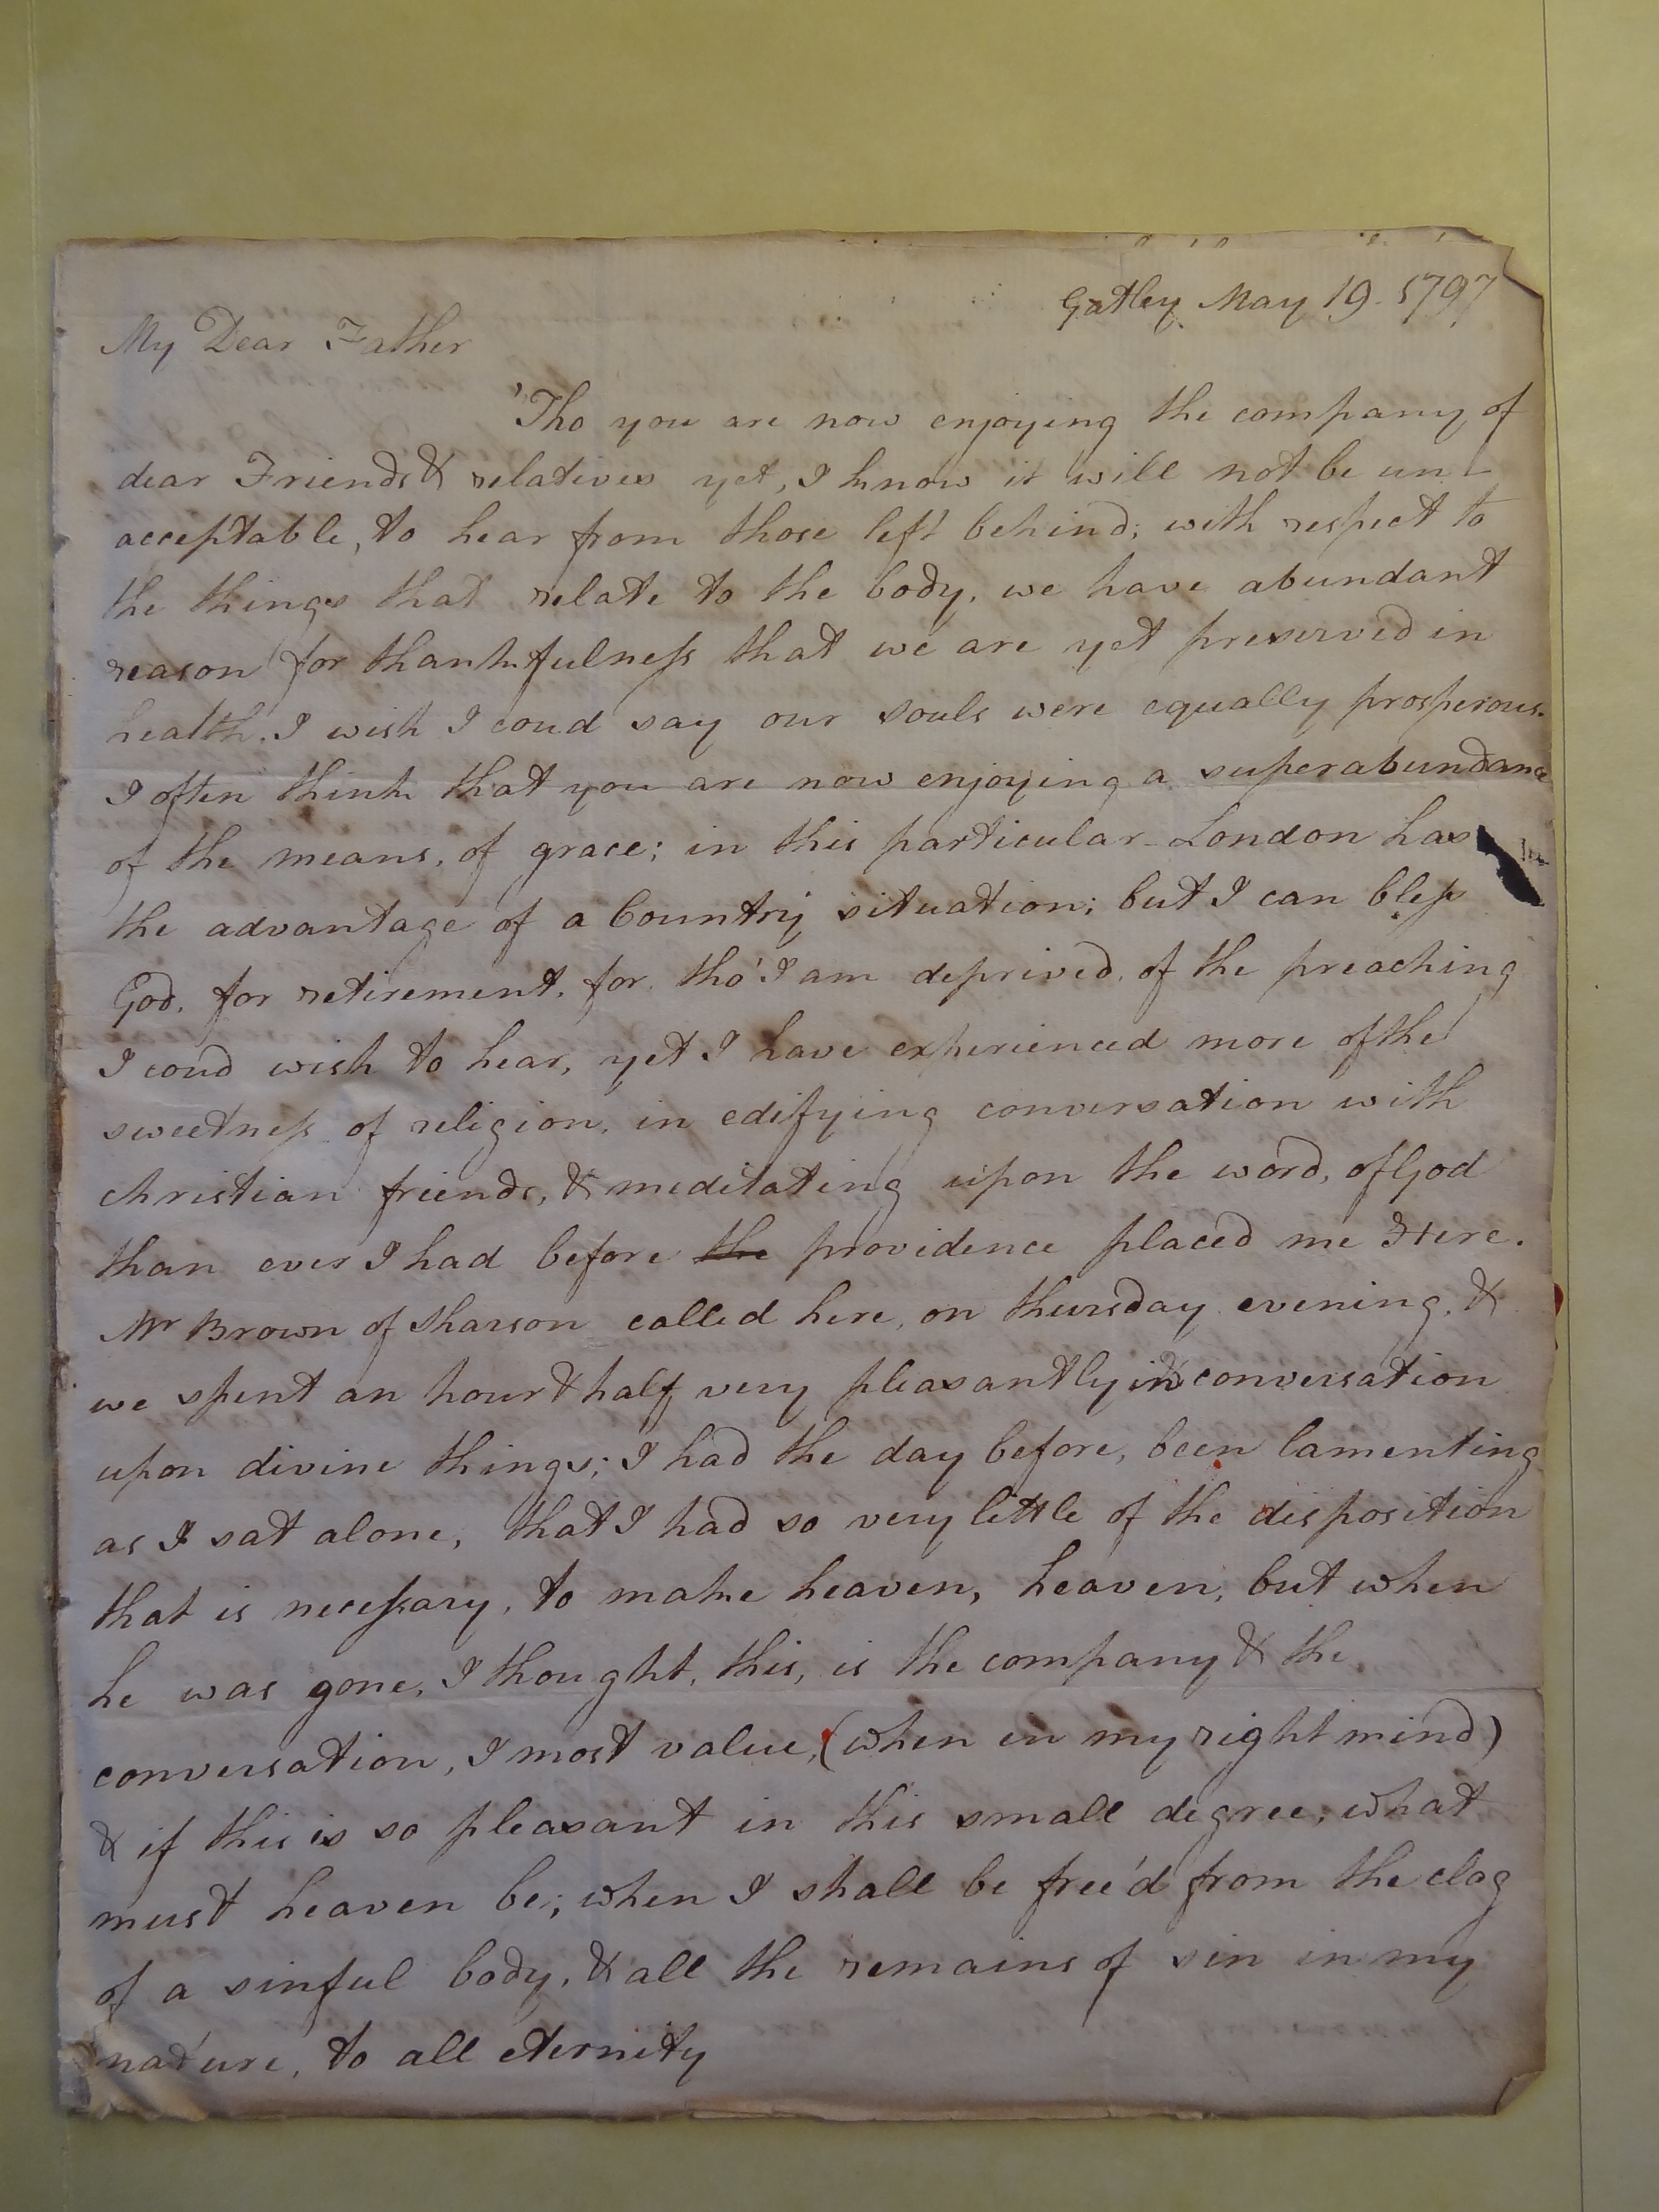 Image #1 of letter: Rebekah Bateman to Arthur Clegg, 19 May 1797